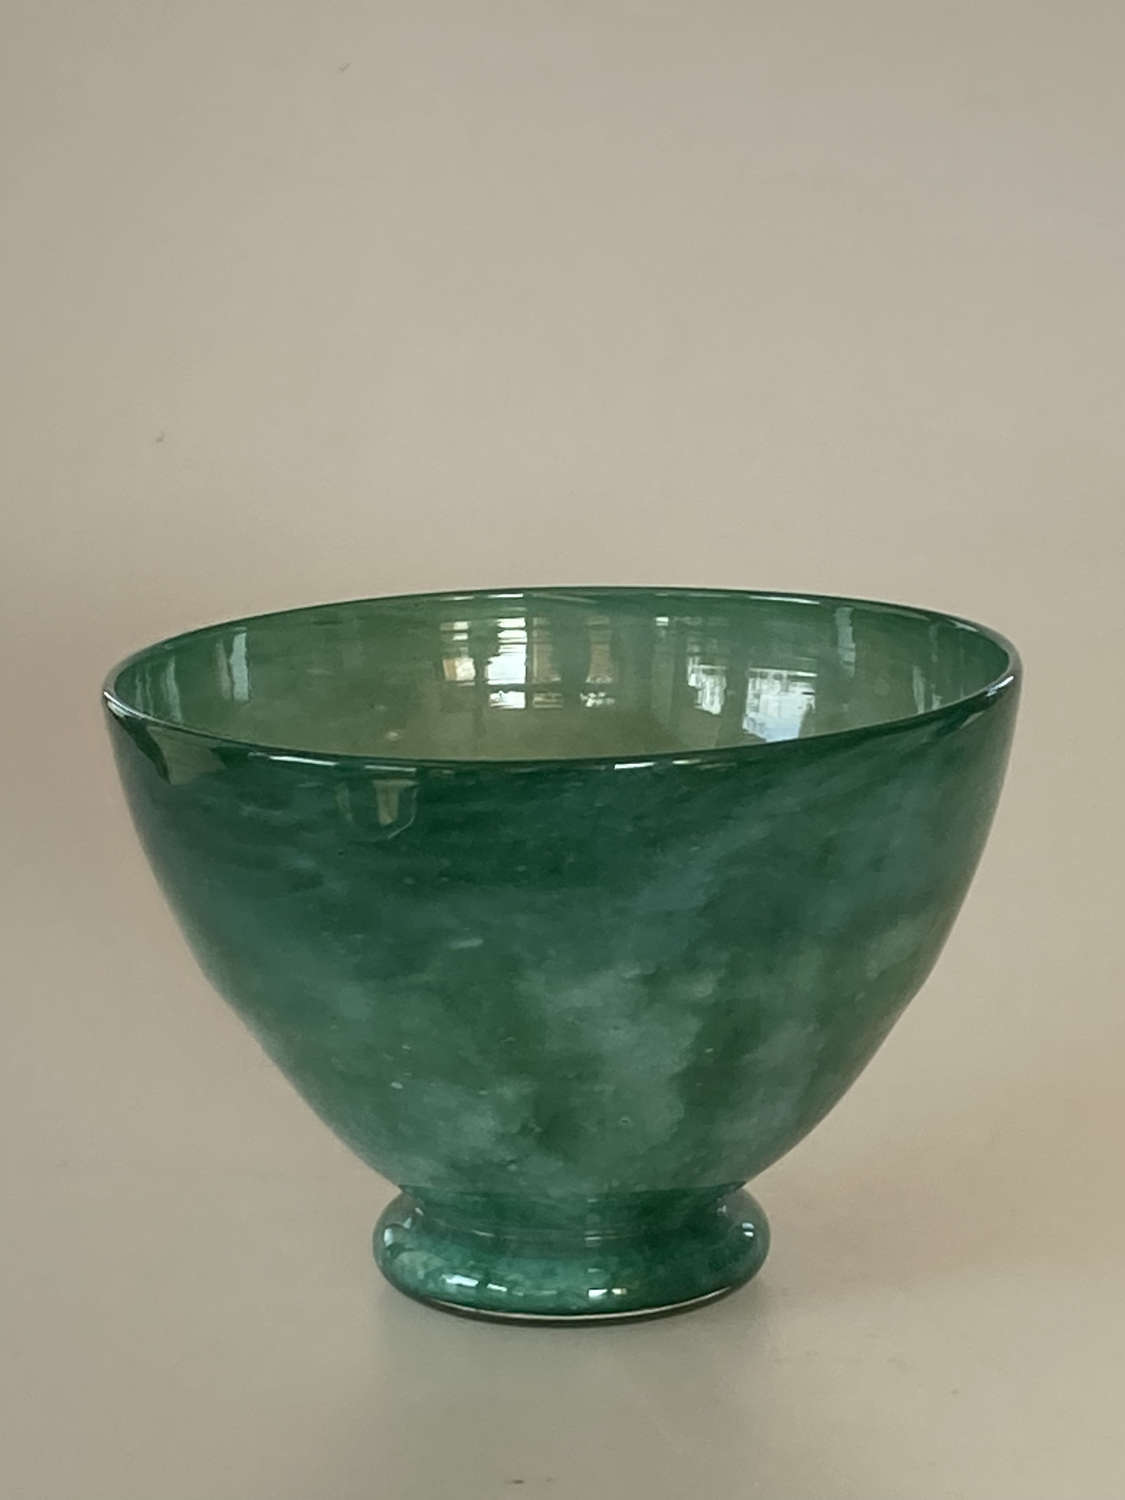 Blue/green cloudy bowl